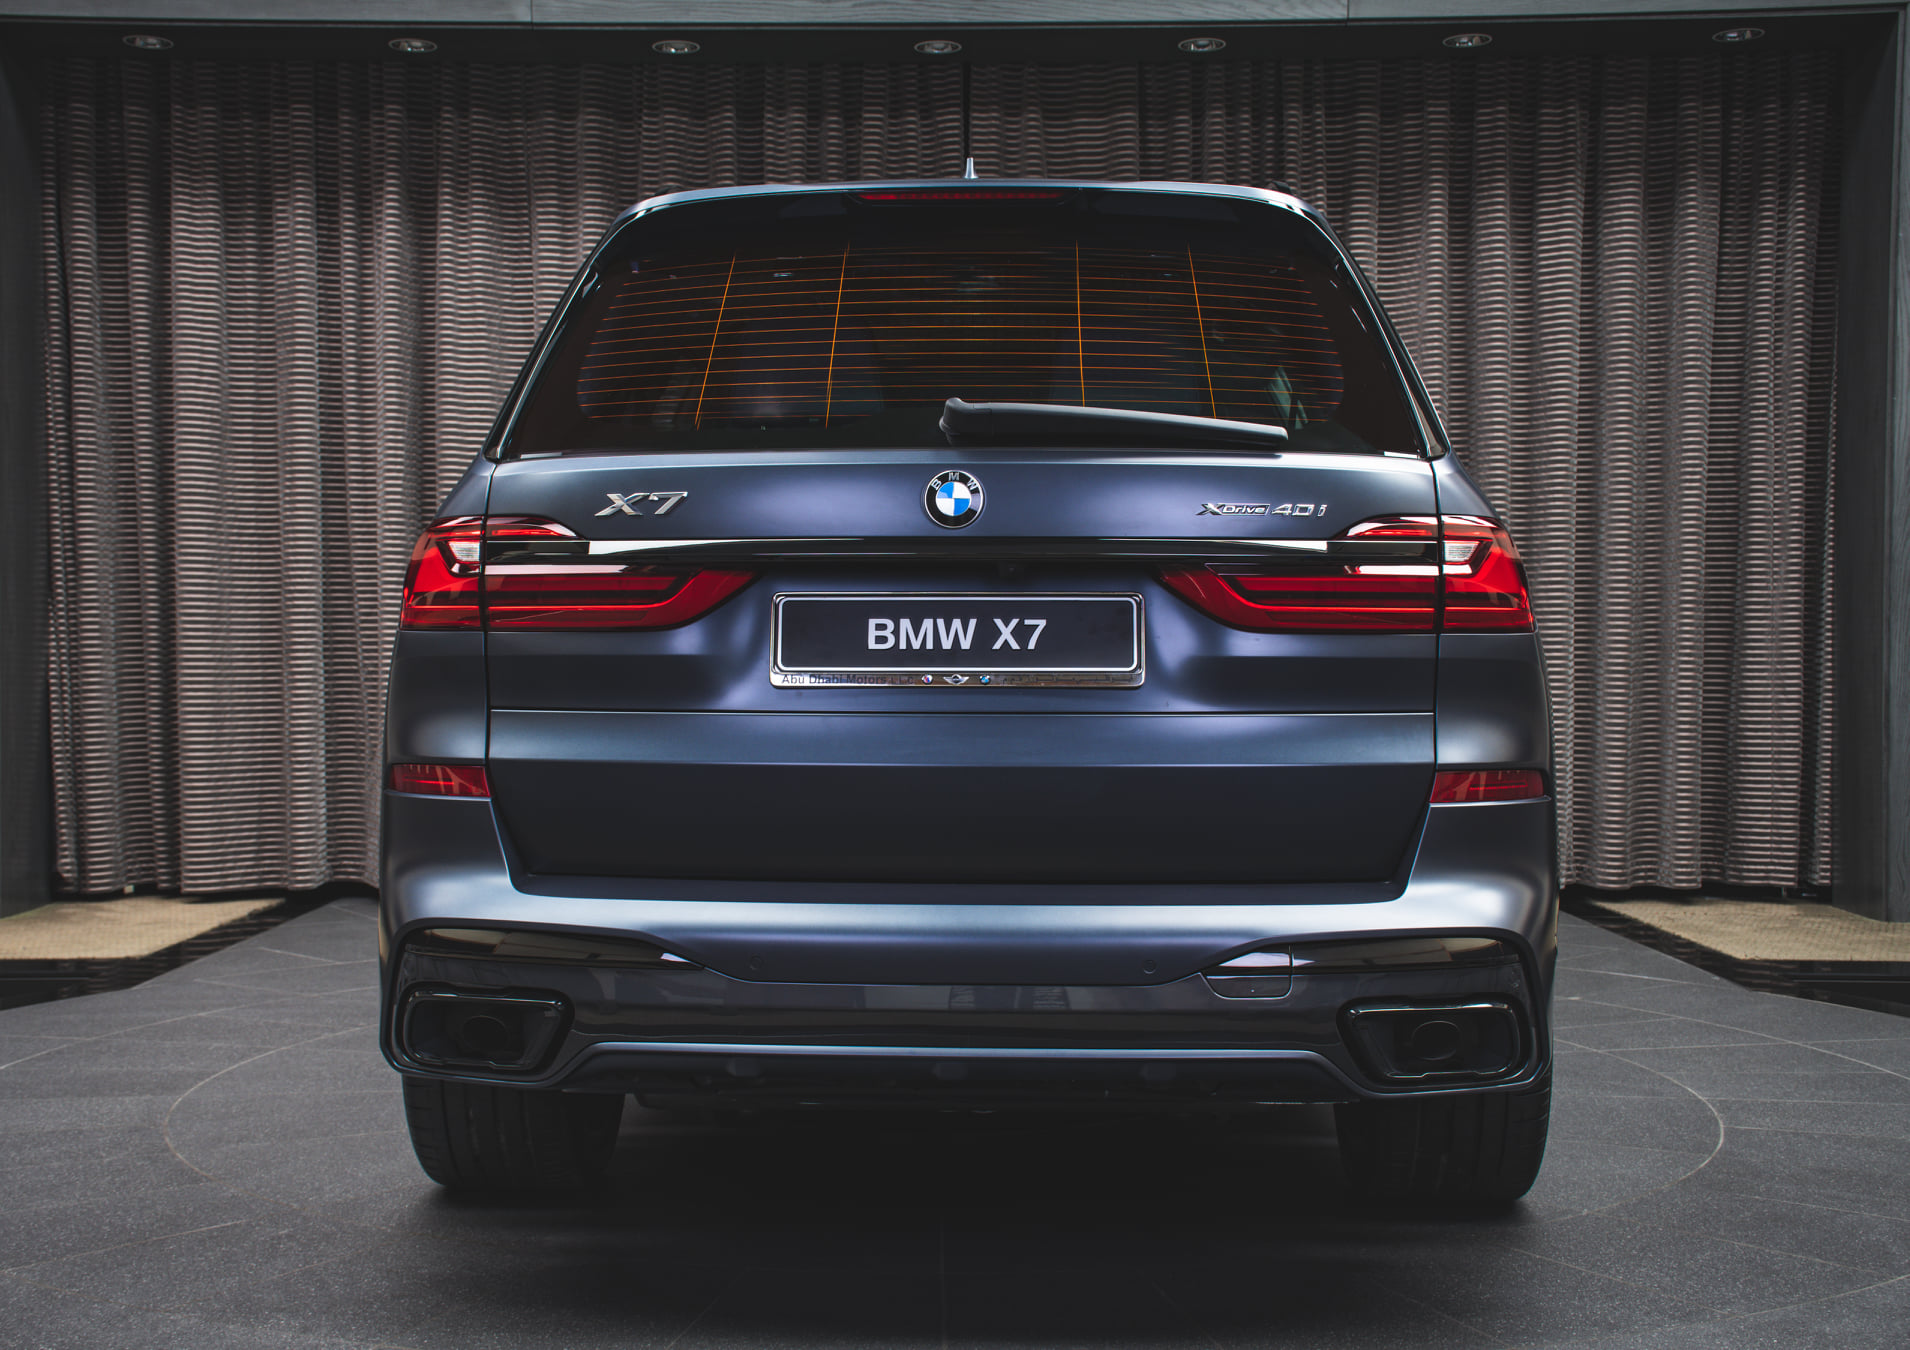 BMW X7 Dark Shadow Edition begin delivery